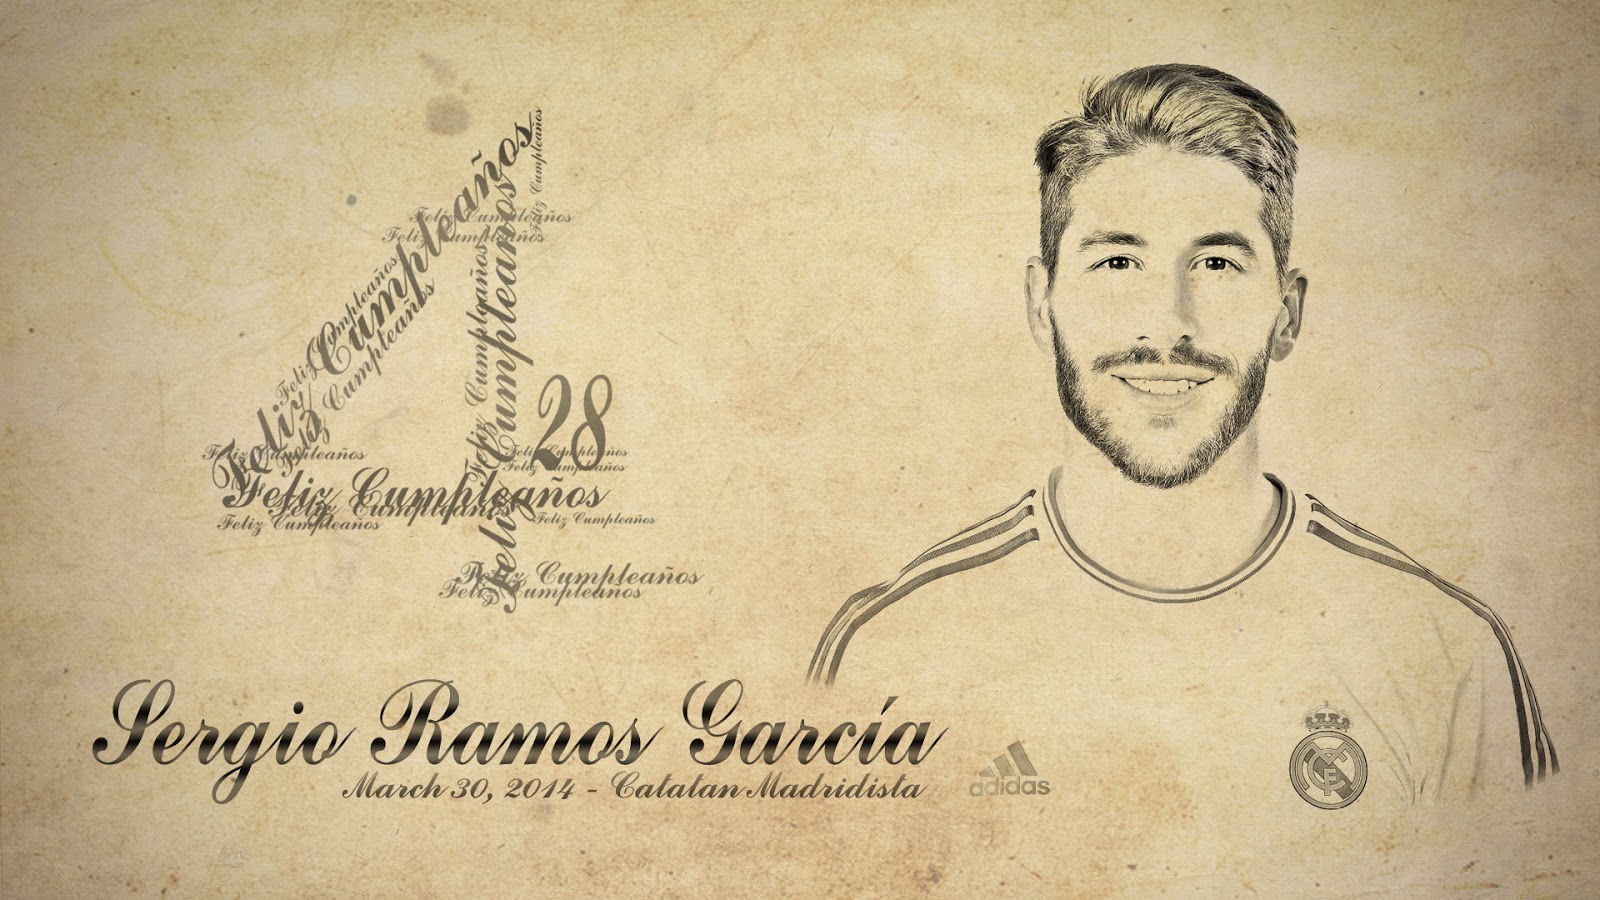 Catatan Madridista Hbd Sergio Ramos